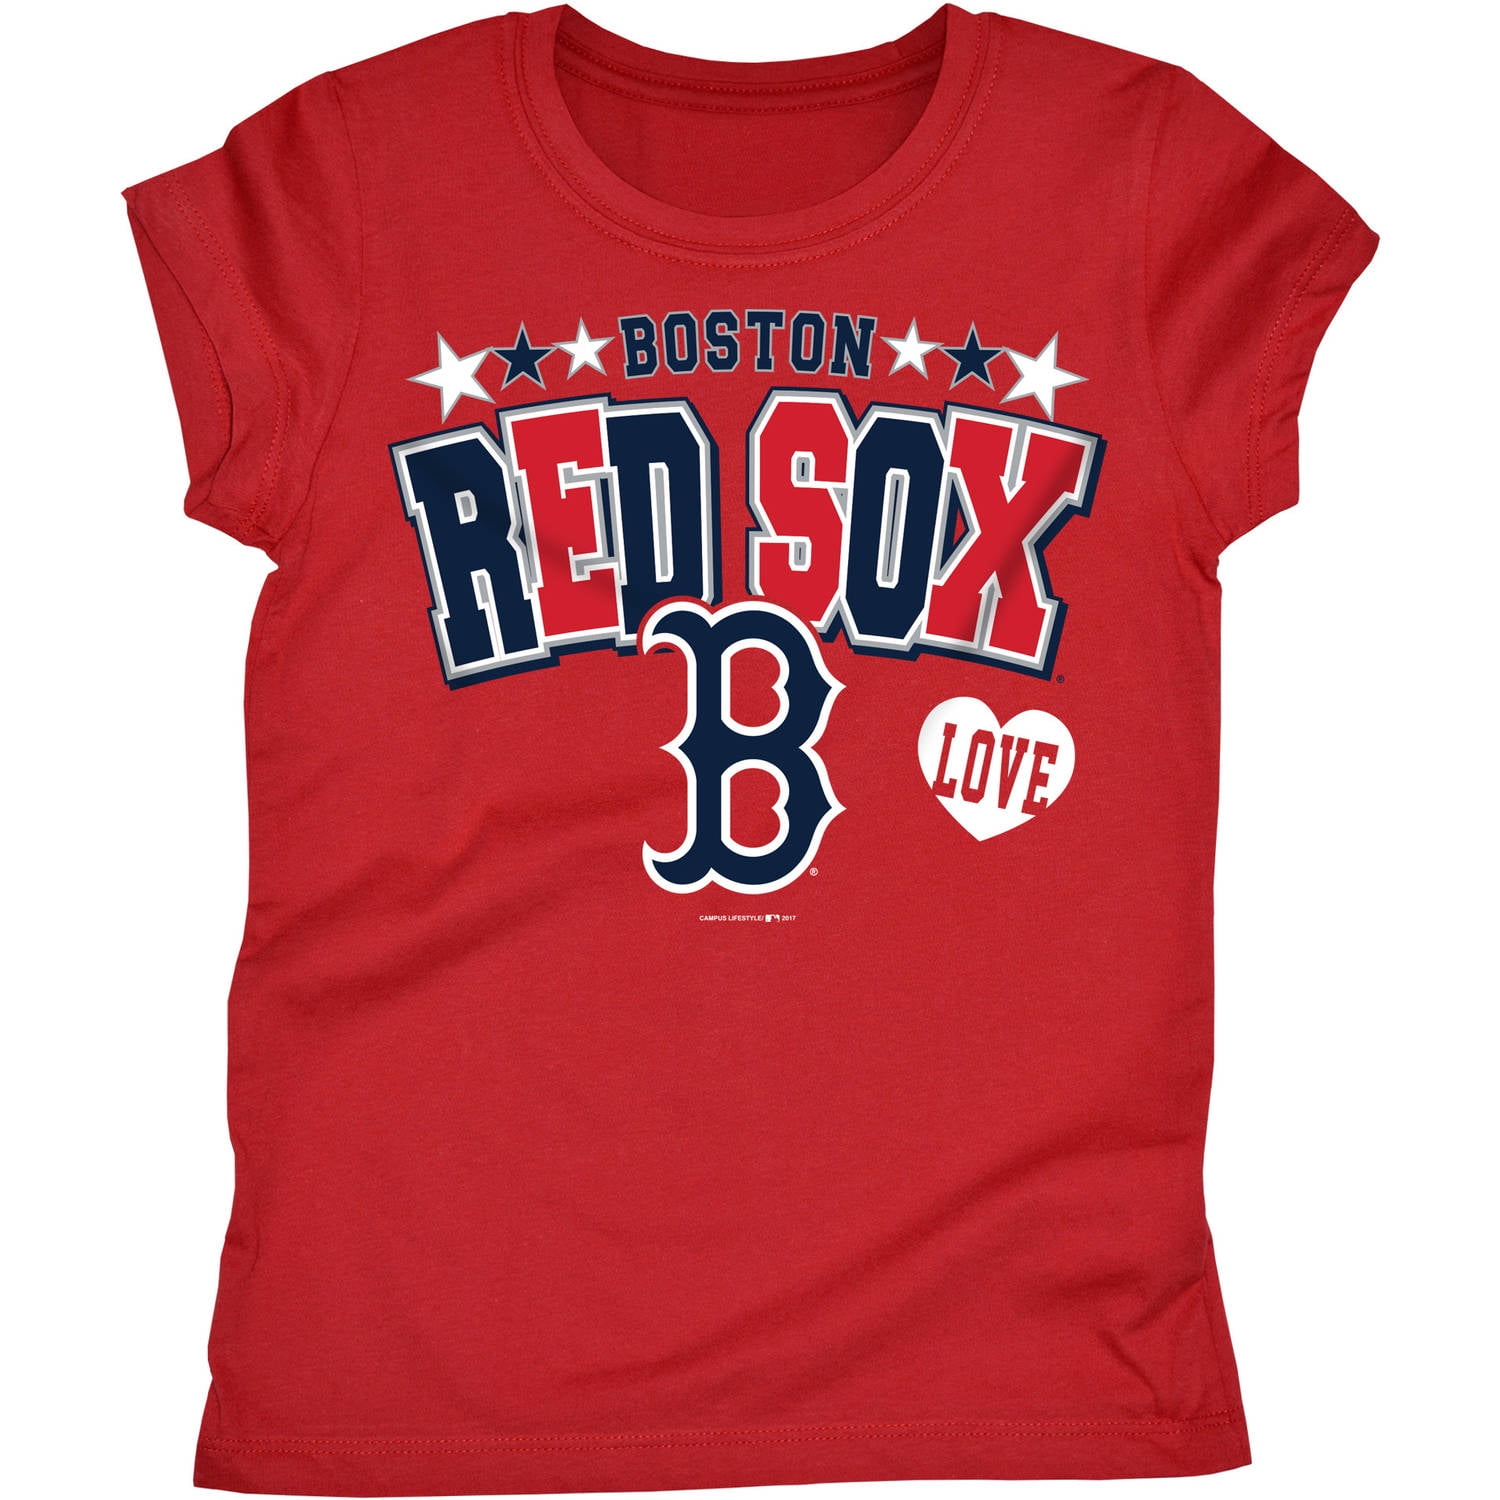 boston red sox girl shirts